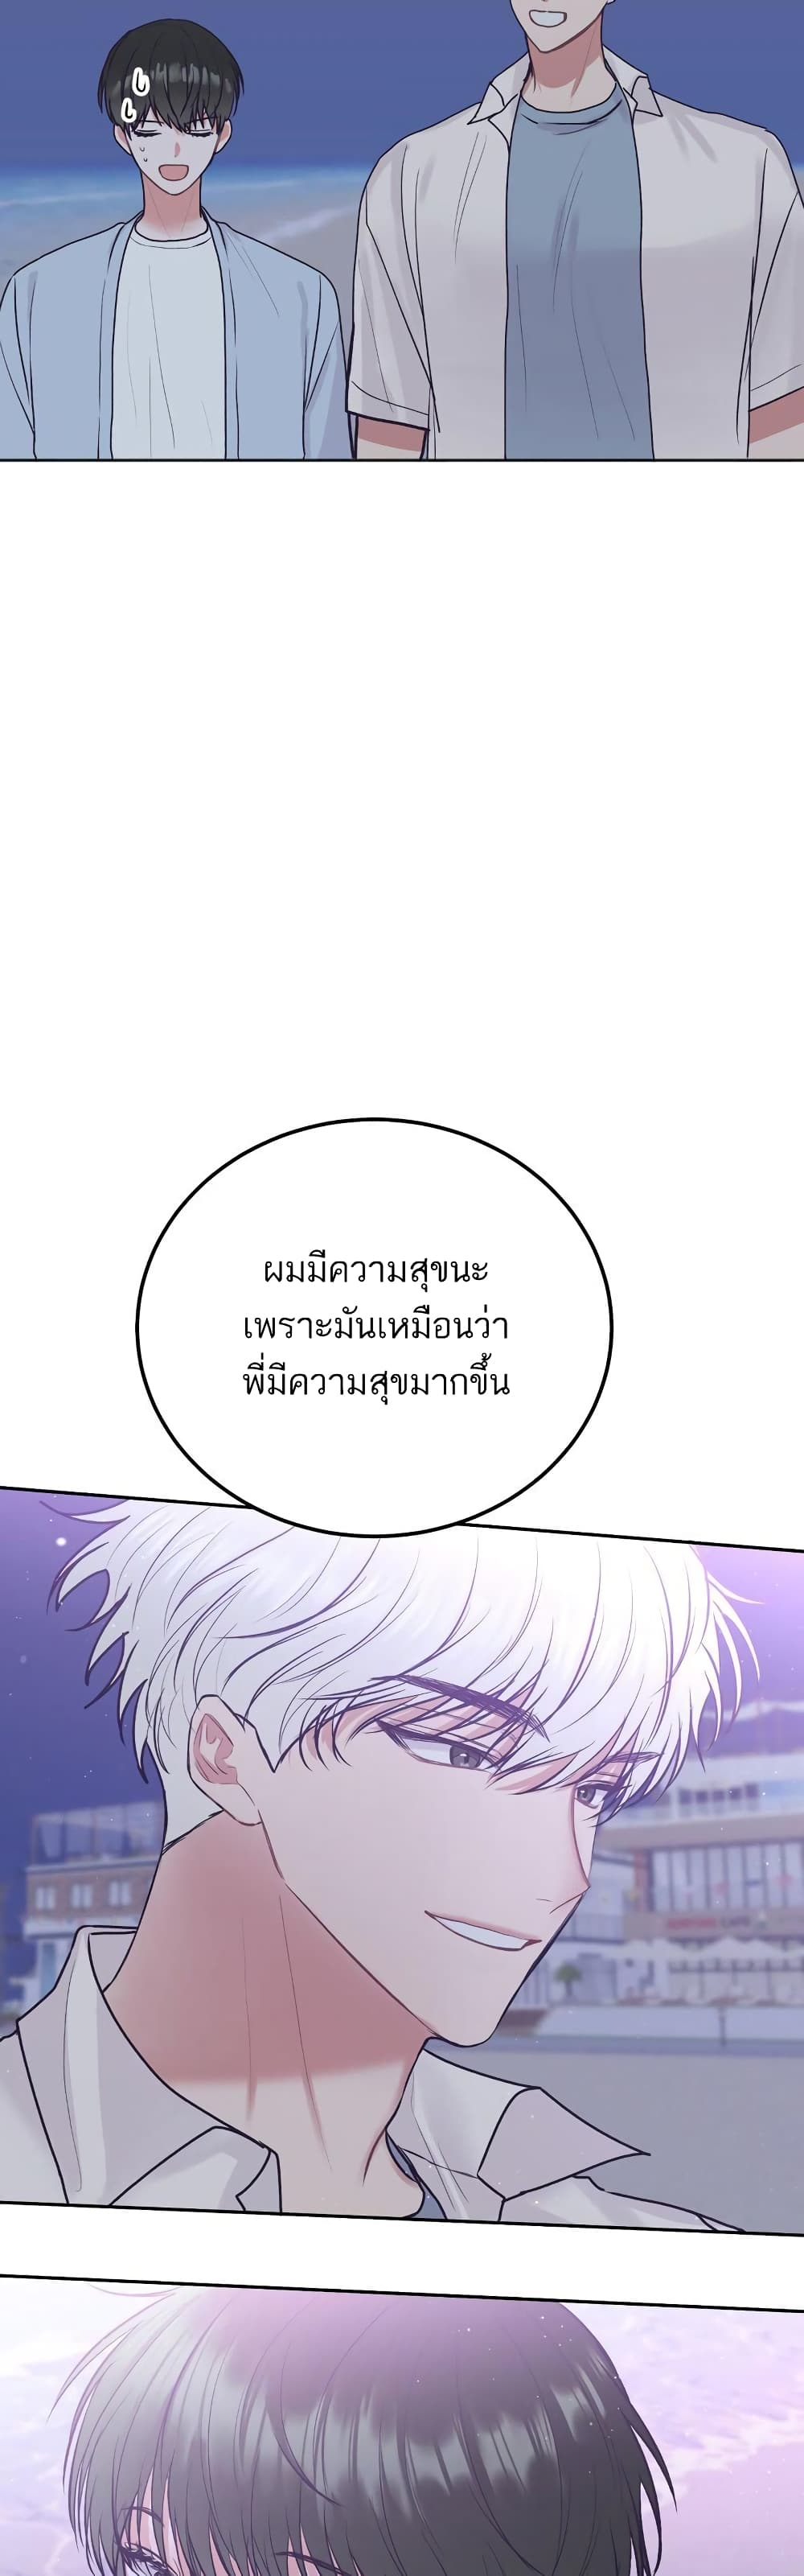 Don't cry sunbae 47 31